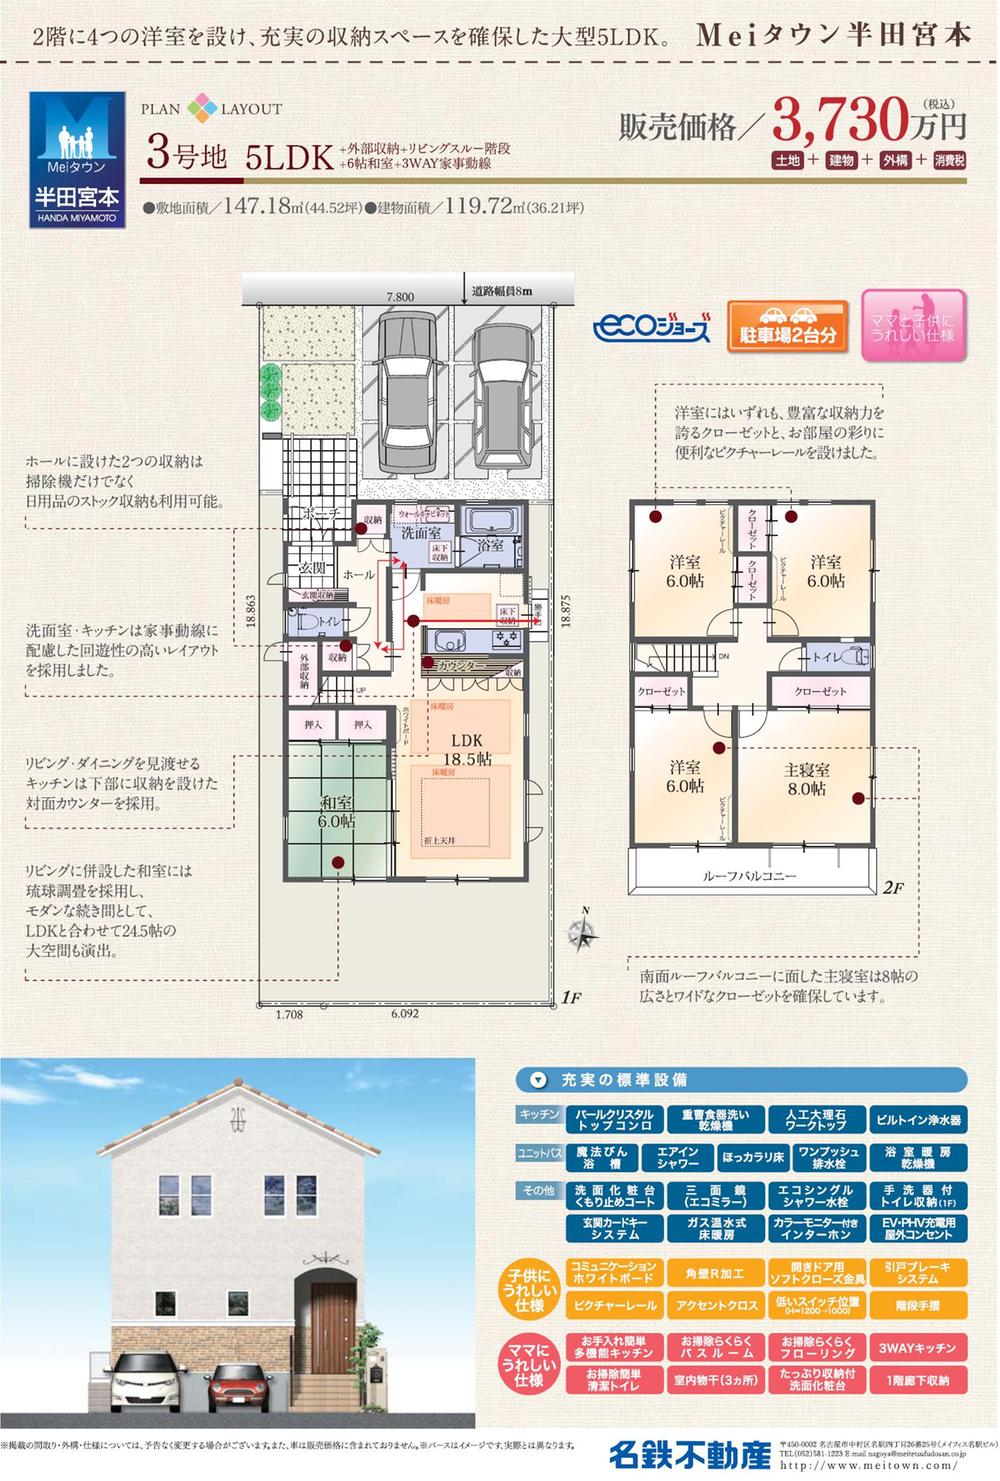 Floor plan. (No. 3 locations), Price 37,300,000 yen, 5LDK, Land area 147.18 sq m , Building area 119.72 sq m